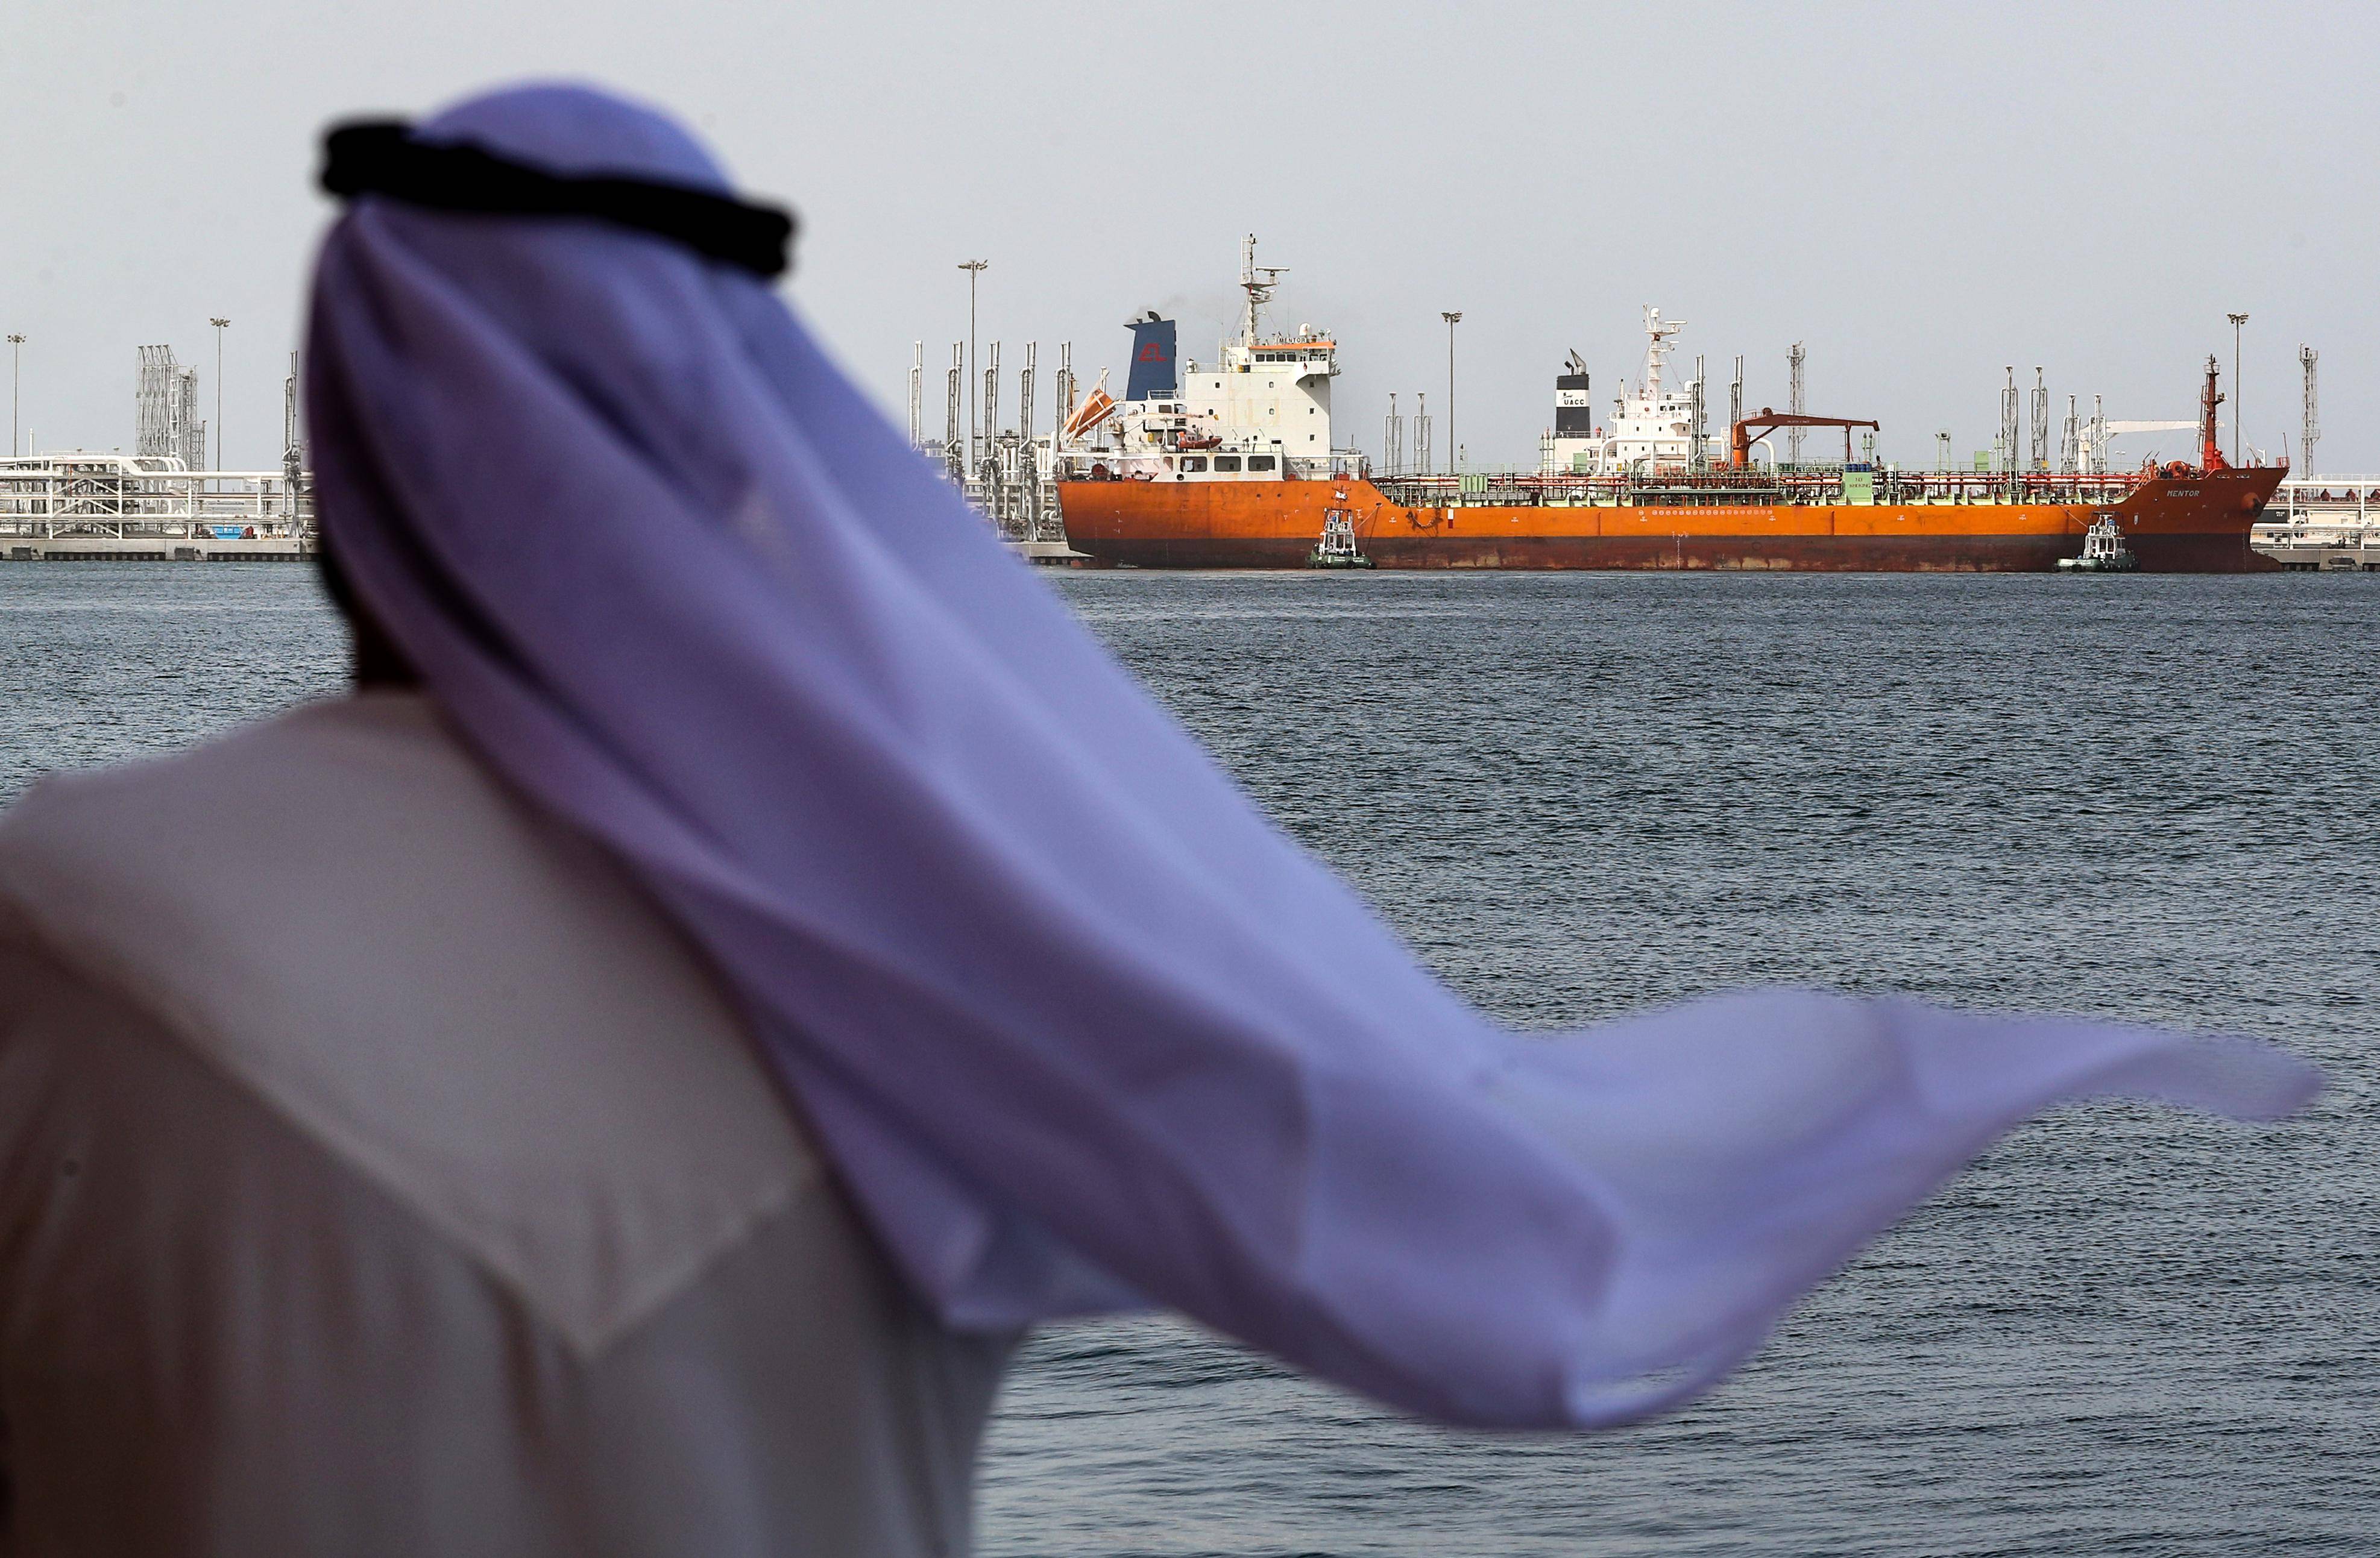 Страны персидского залива нефть